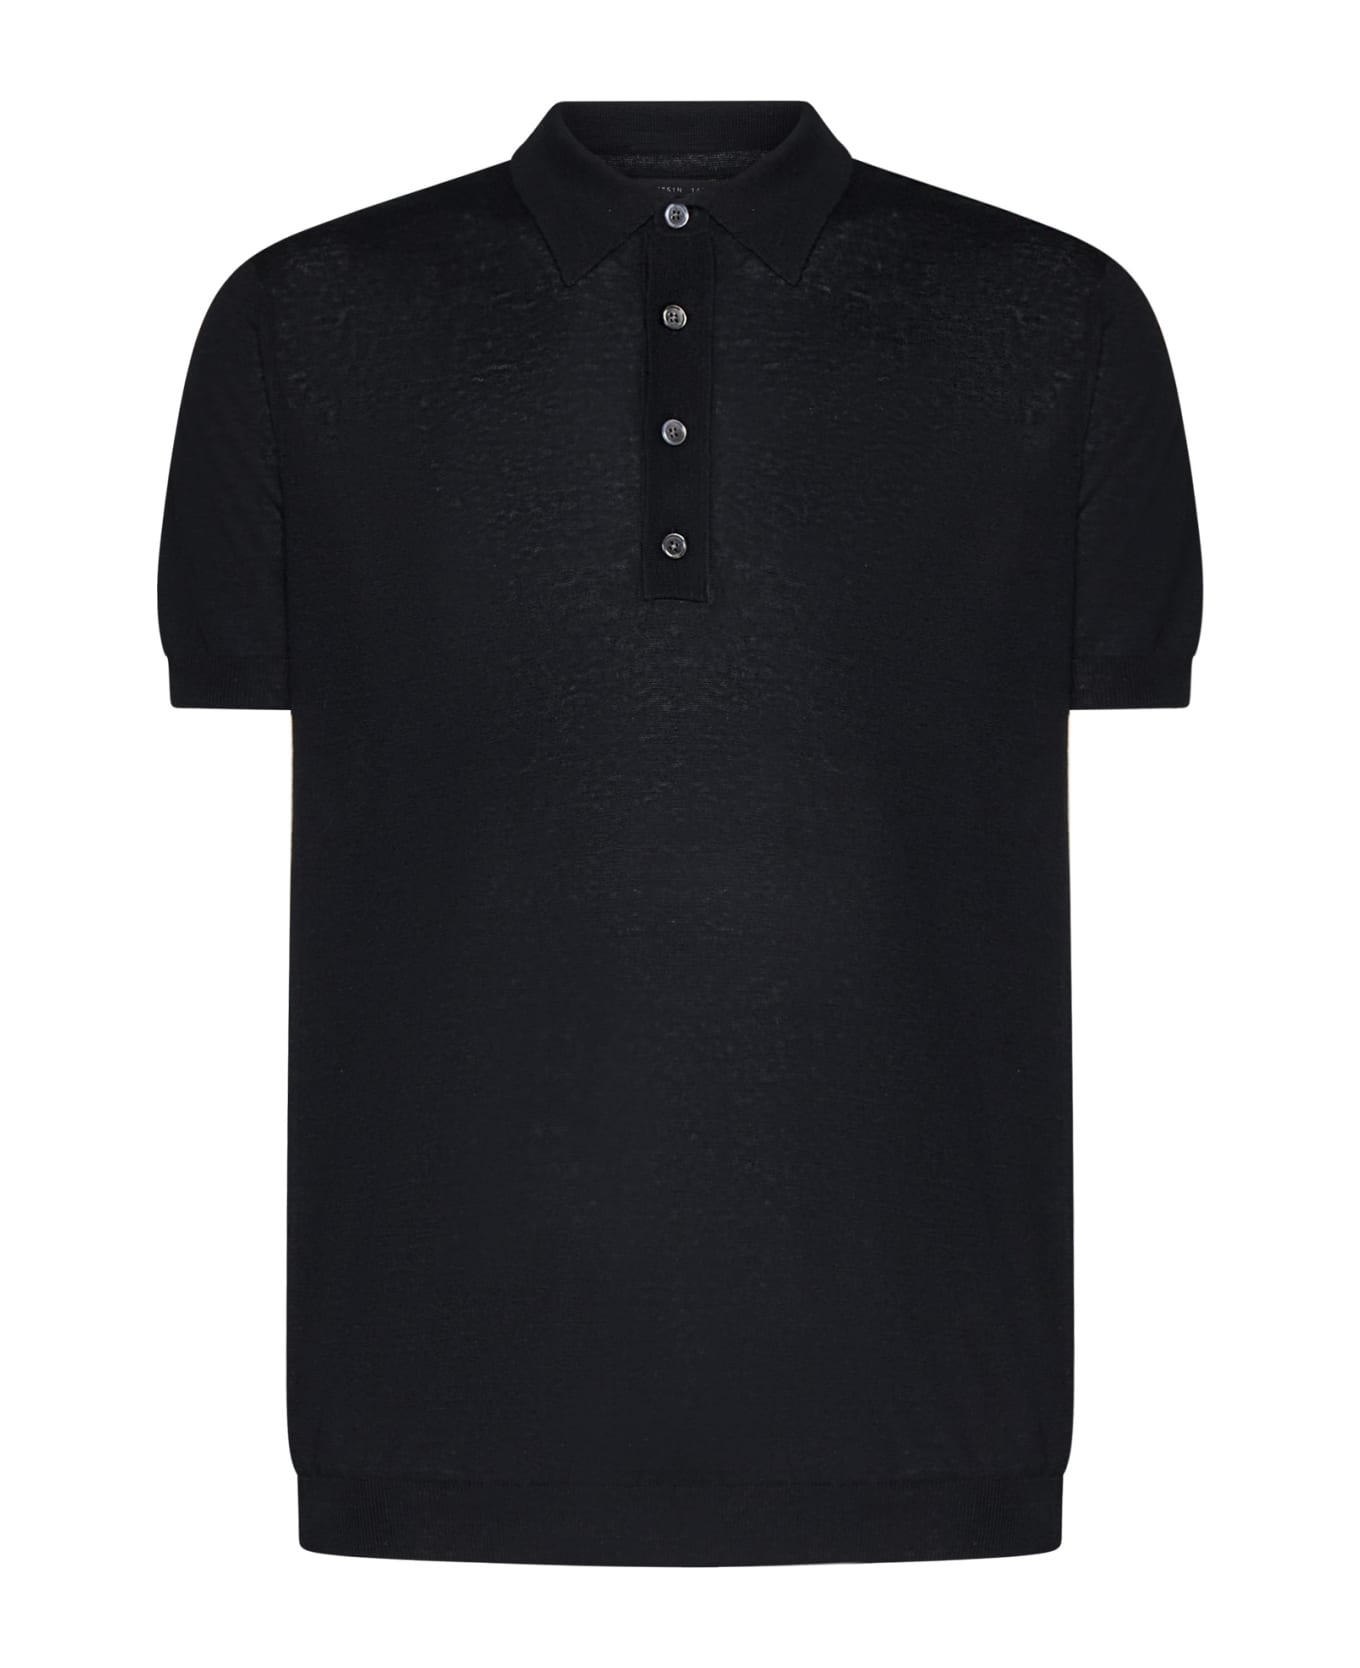 Low Brand Polo Shirt - Jet black